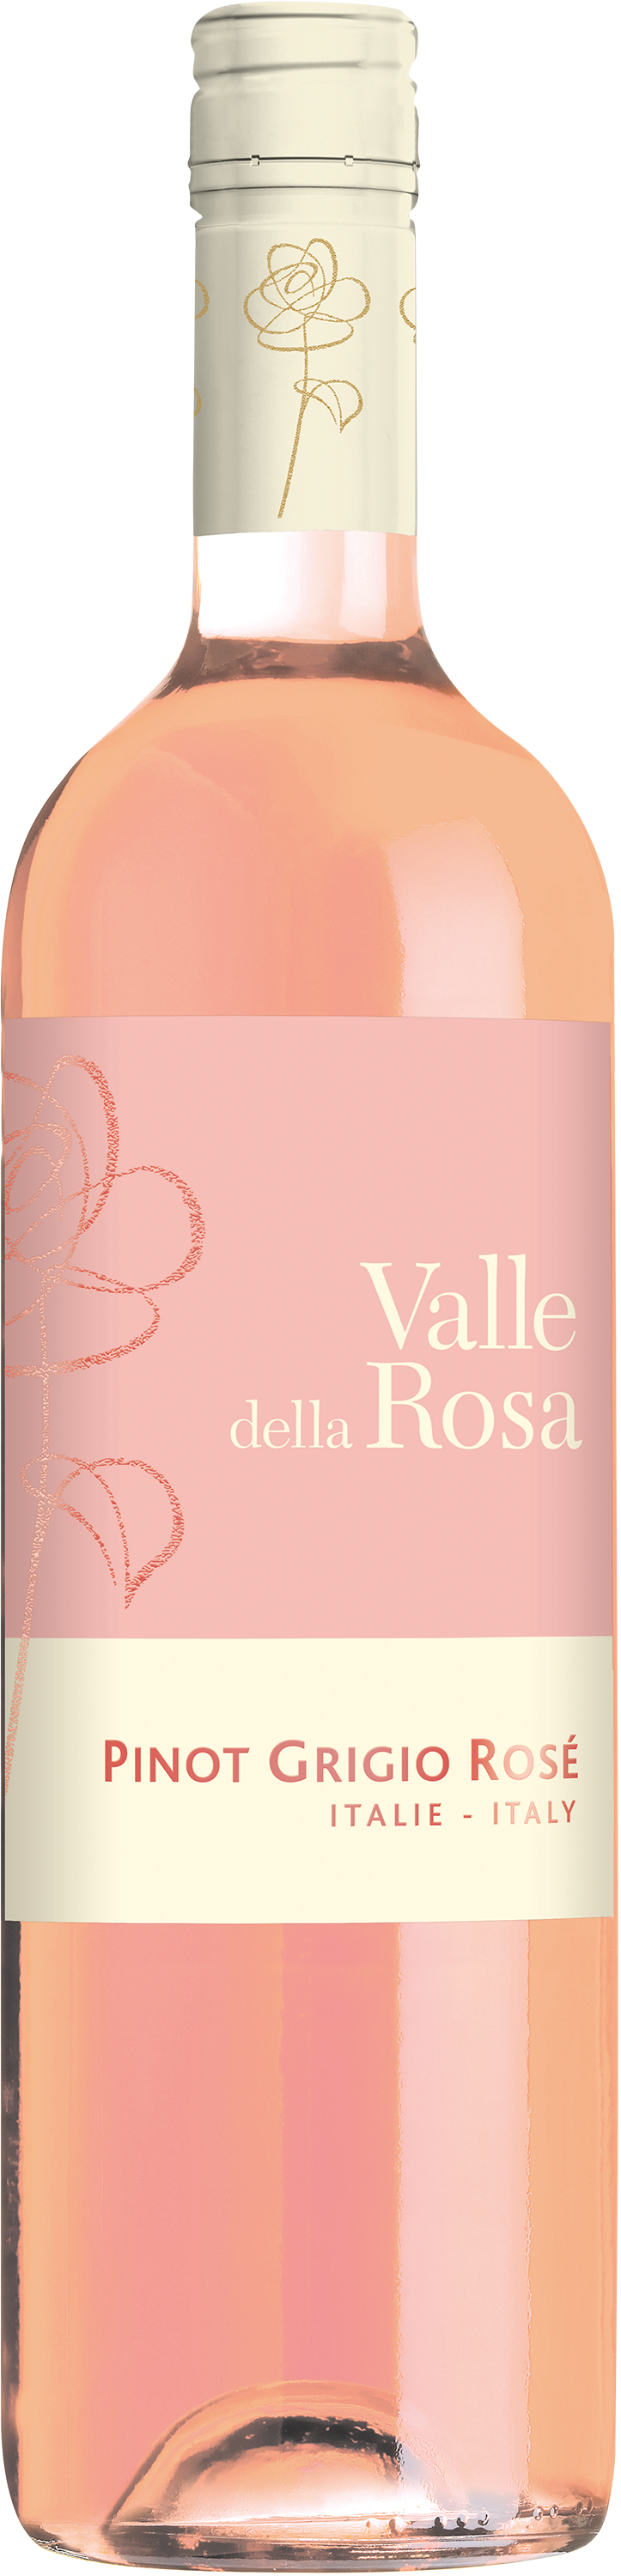 Valle della Rosa Pinot Grigio Rosé